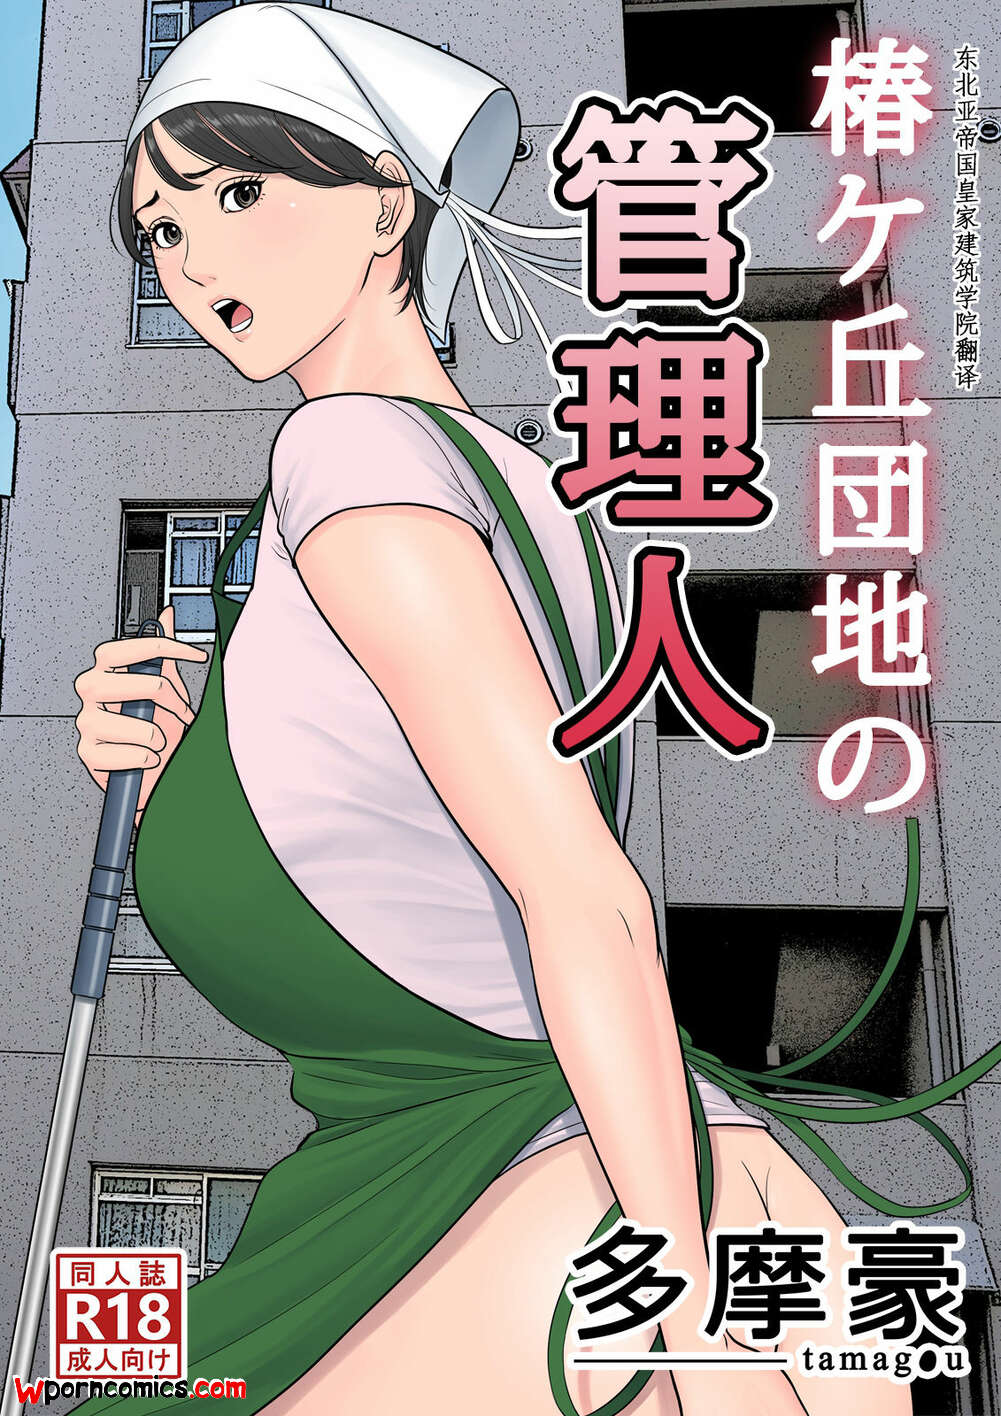 Japanese porno comics